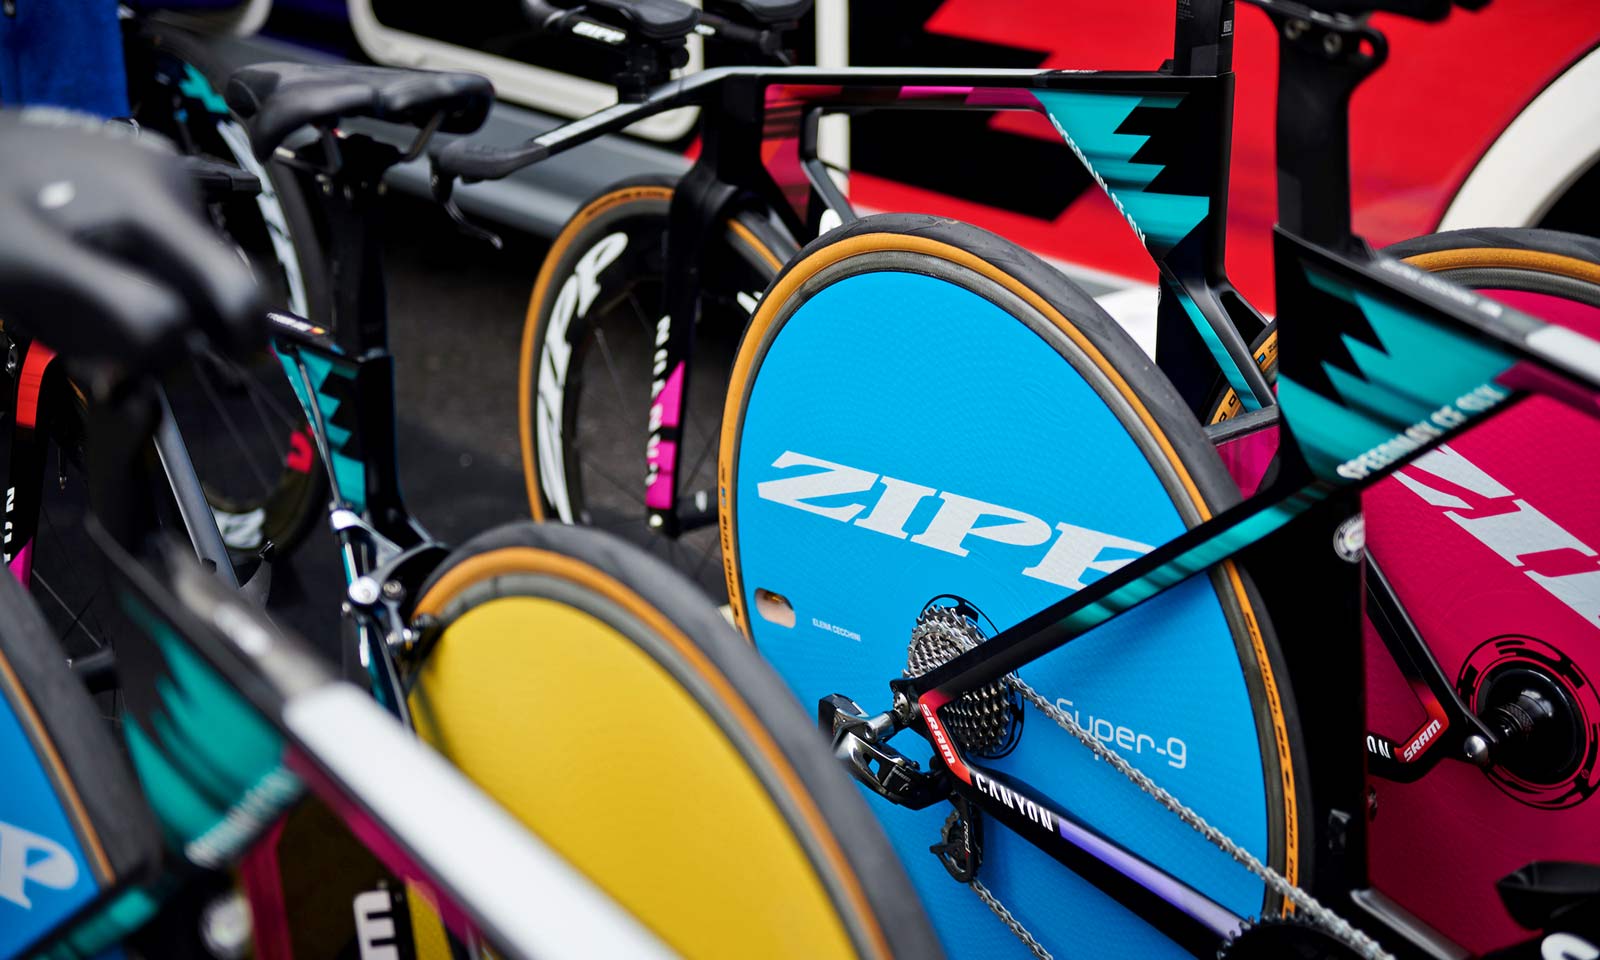 30th anniversary Zipp Super-9 disc wheels adds TT Worlds winning retro color